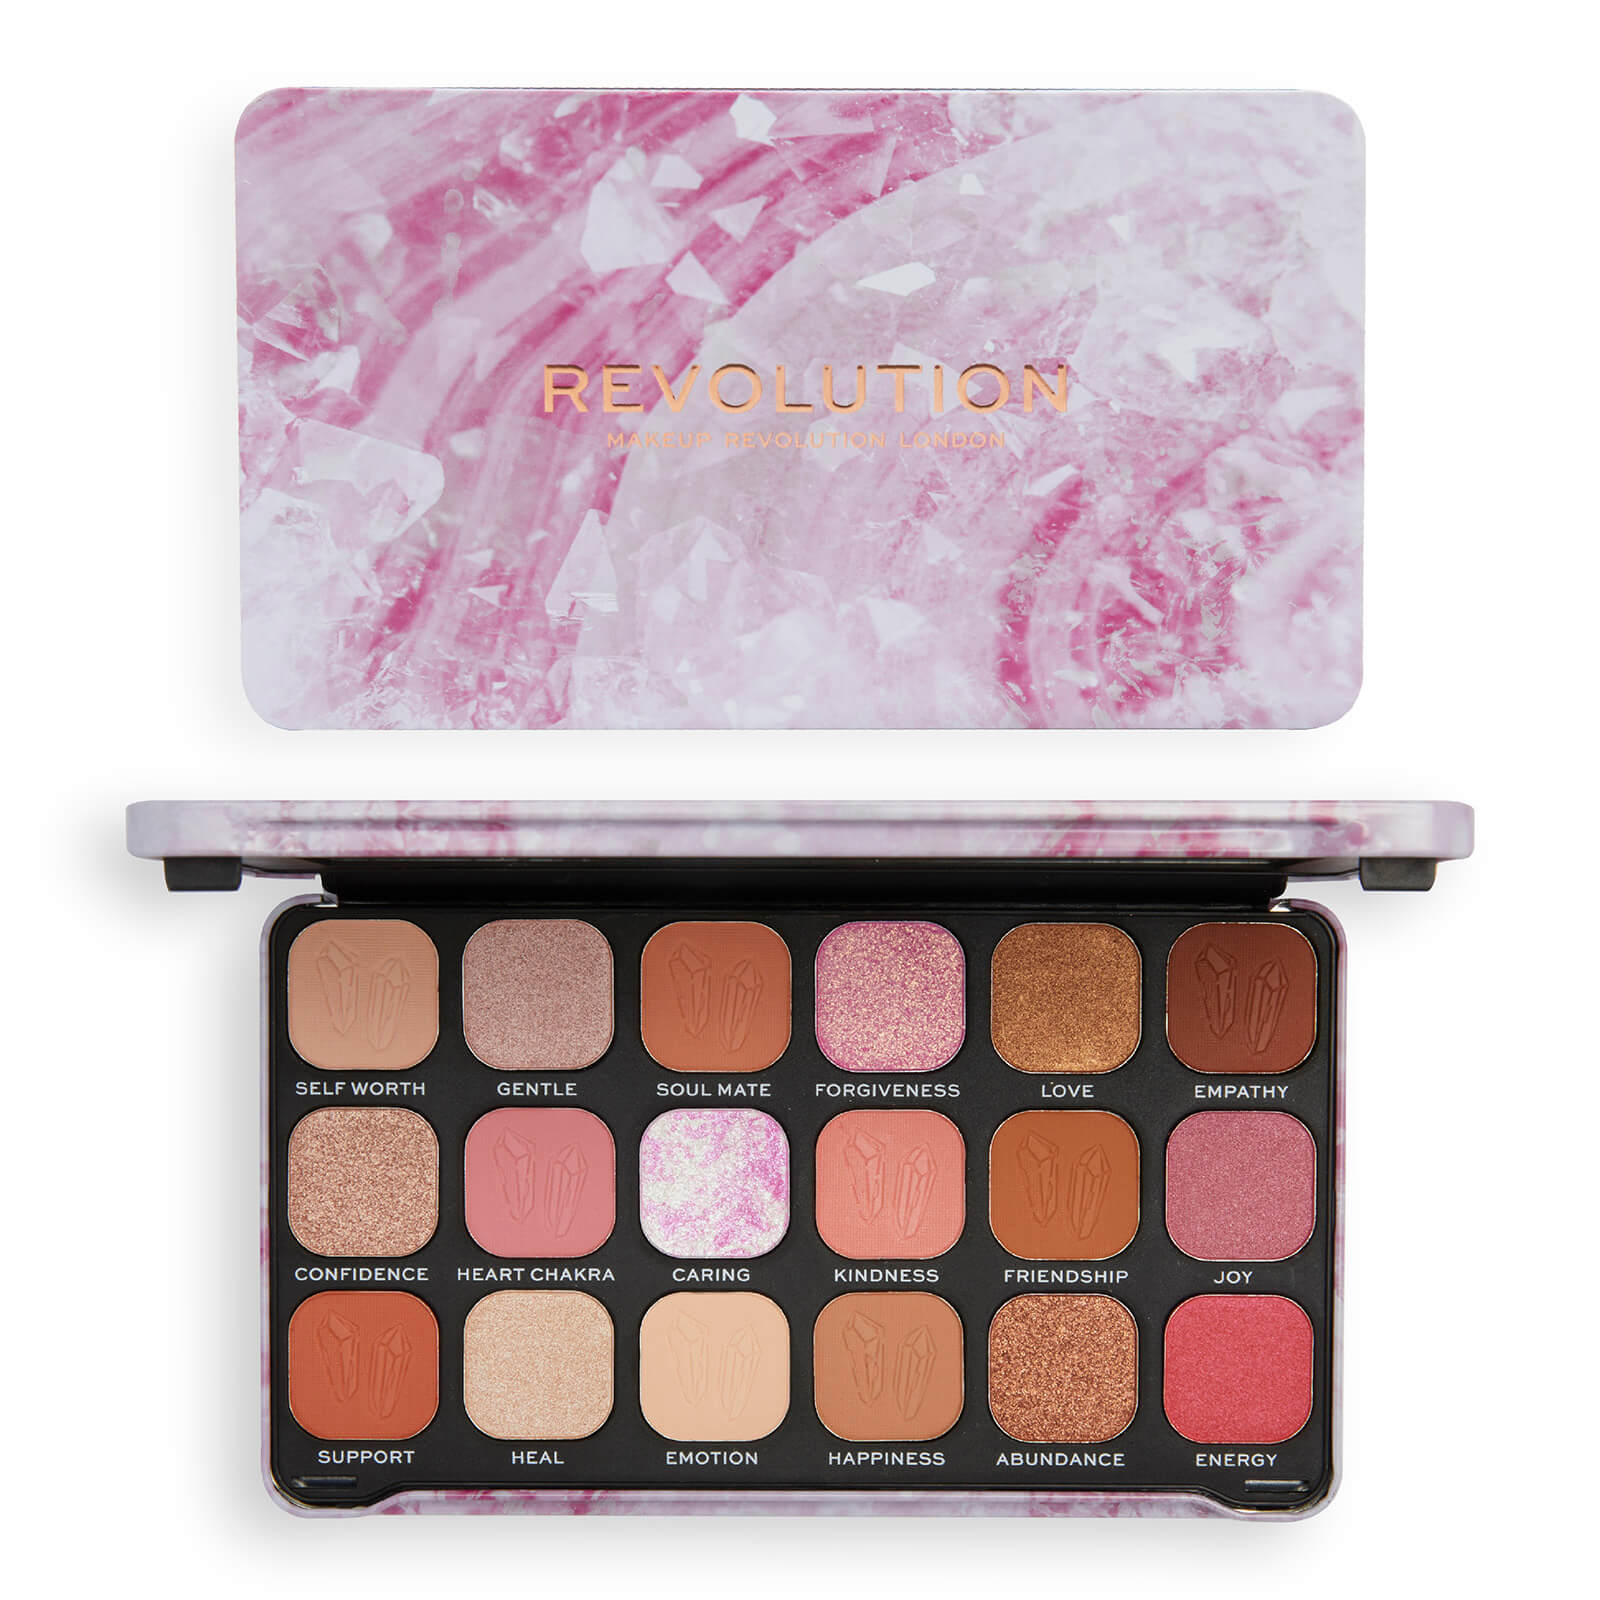 Makeup Revolution Revolution Crystal Aura Forever Flawless Shadow Palette (various Shades) - Rose Quartz